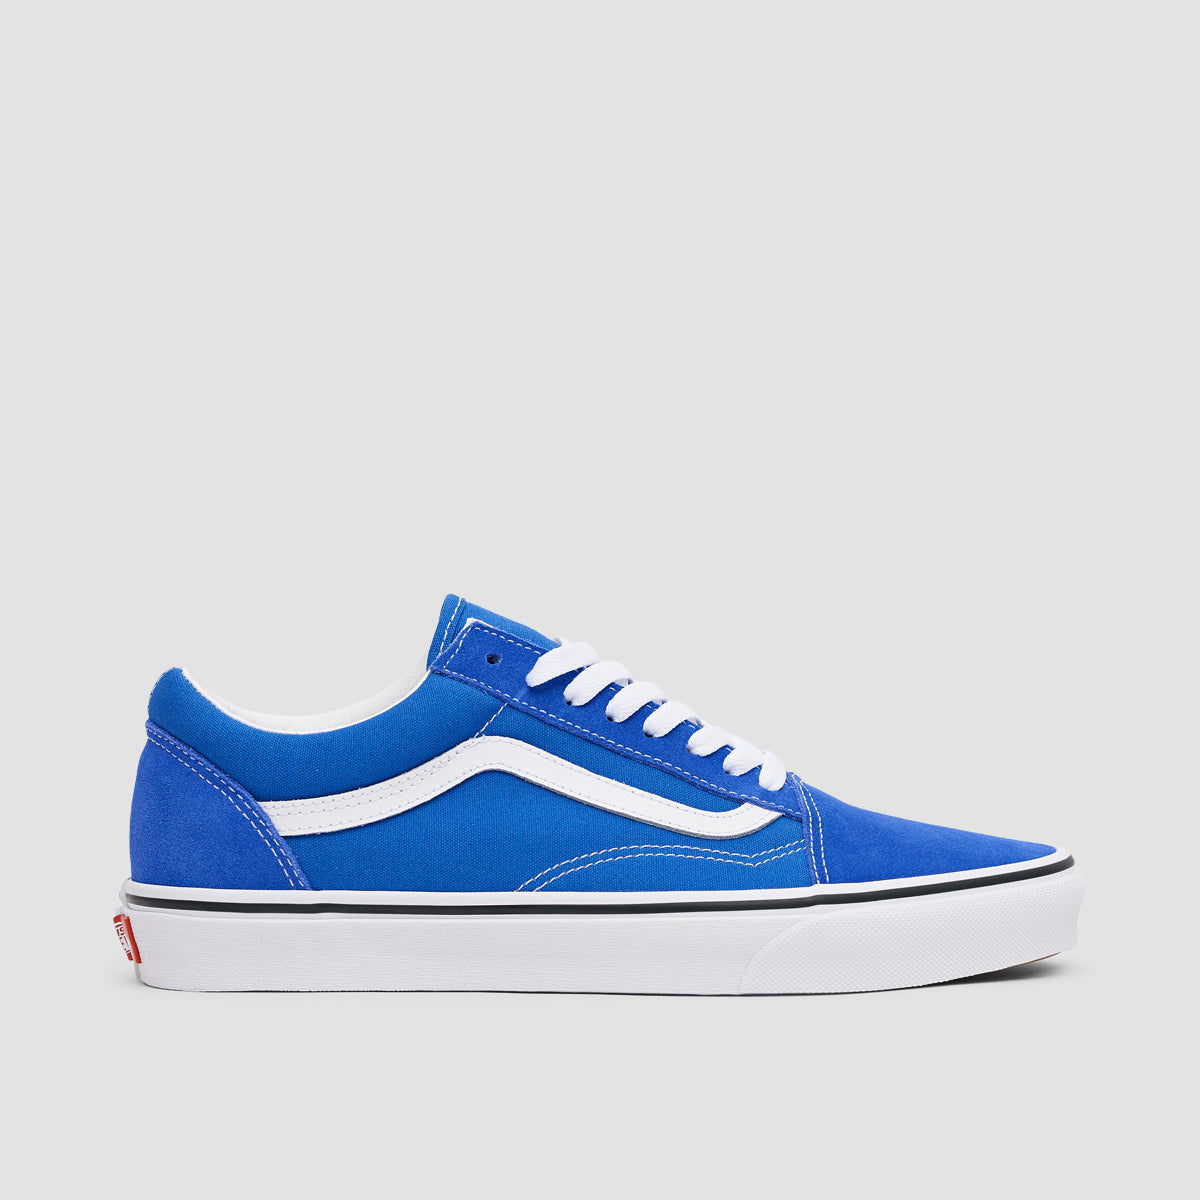 Vans Old Skool Shoes - Dazzling Blue